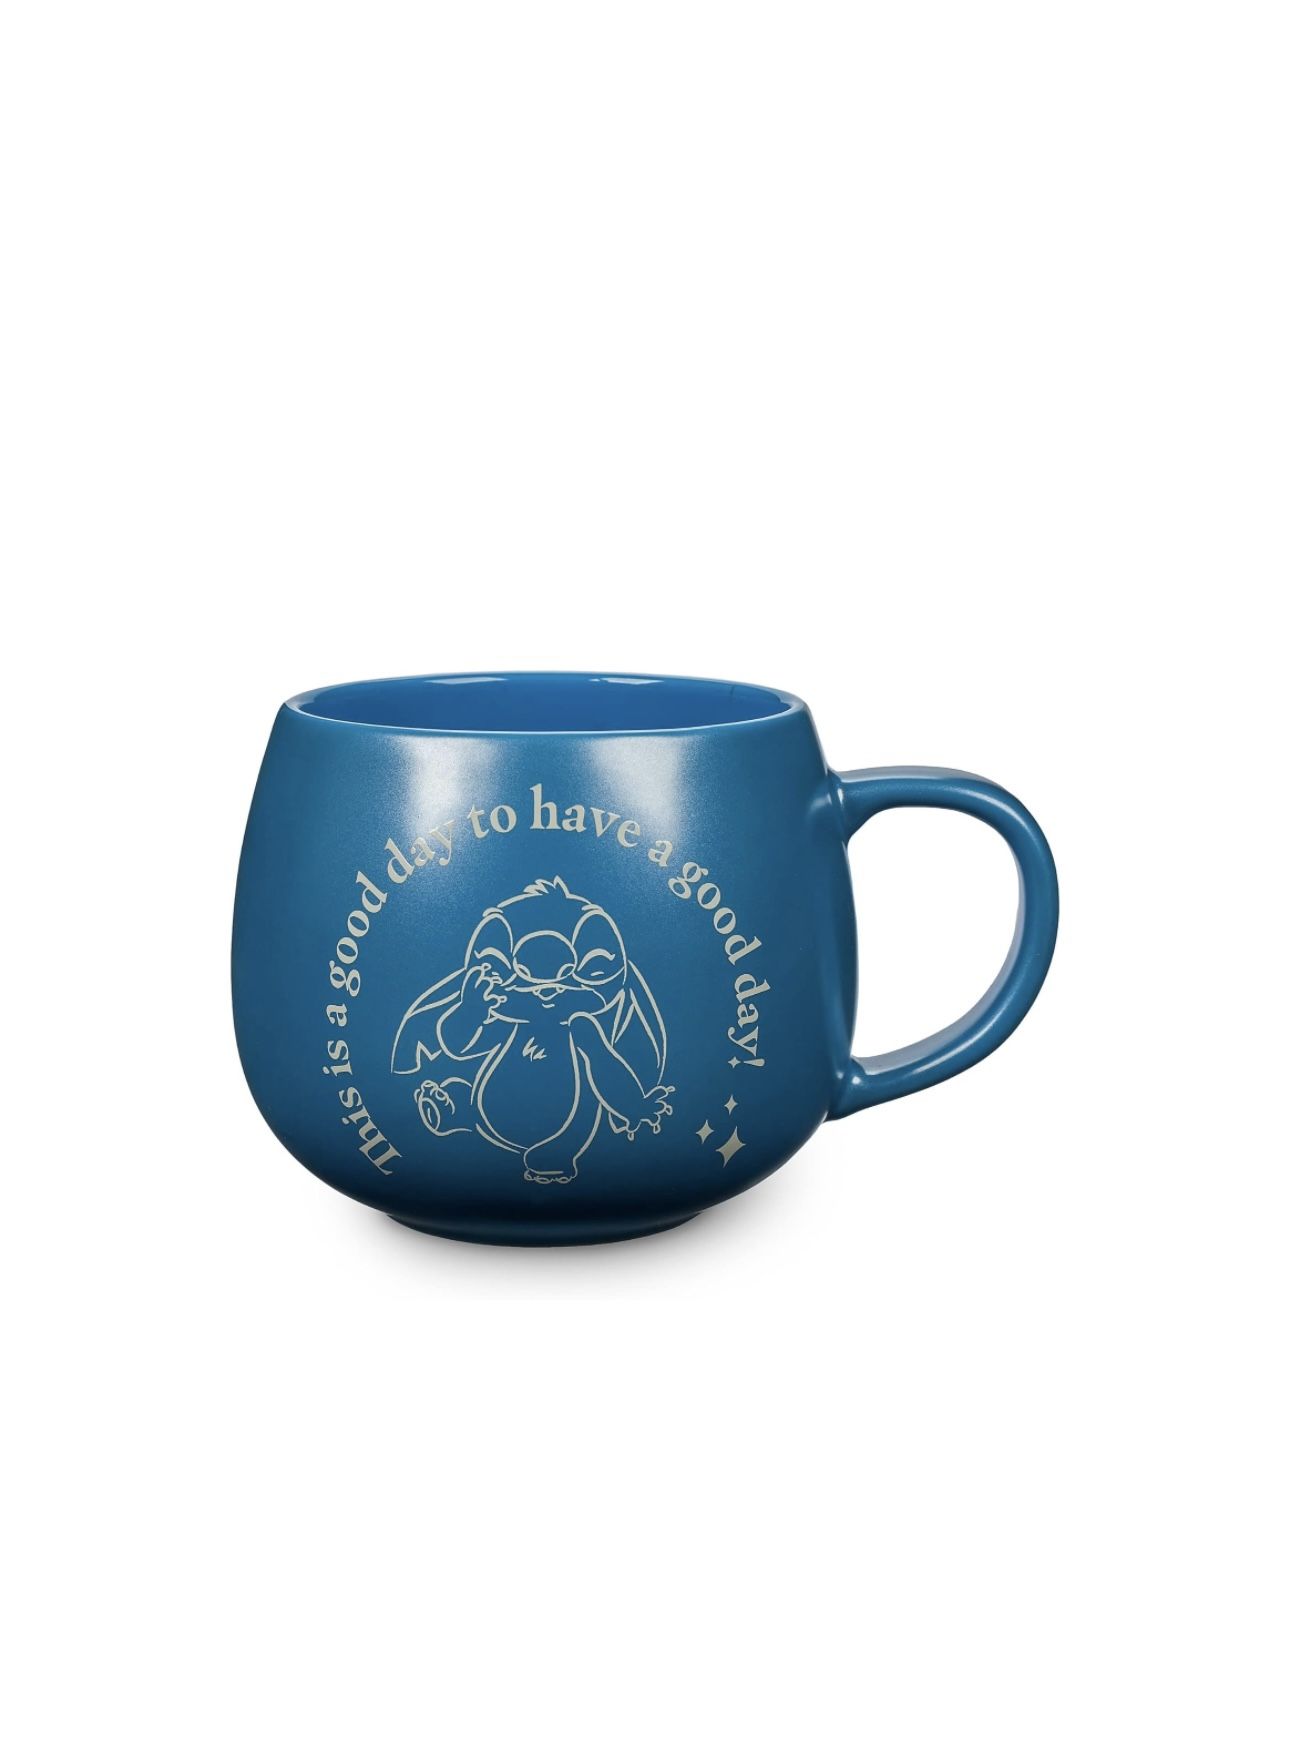 Disney Shop, Coffee Stitch Mug, Blue, New With Tags, Great Gift 🎁 